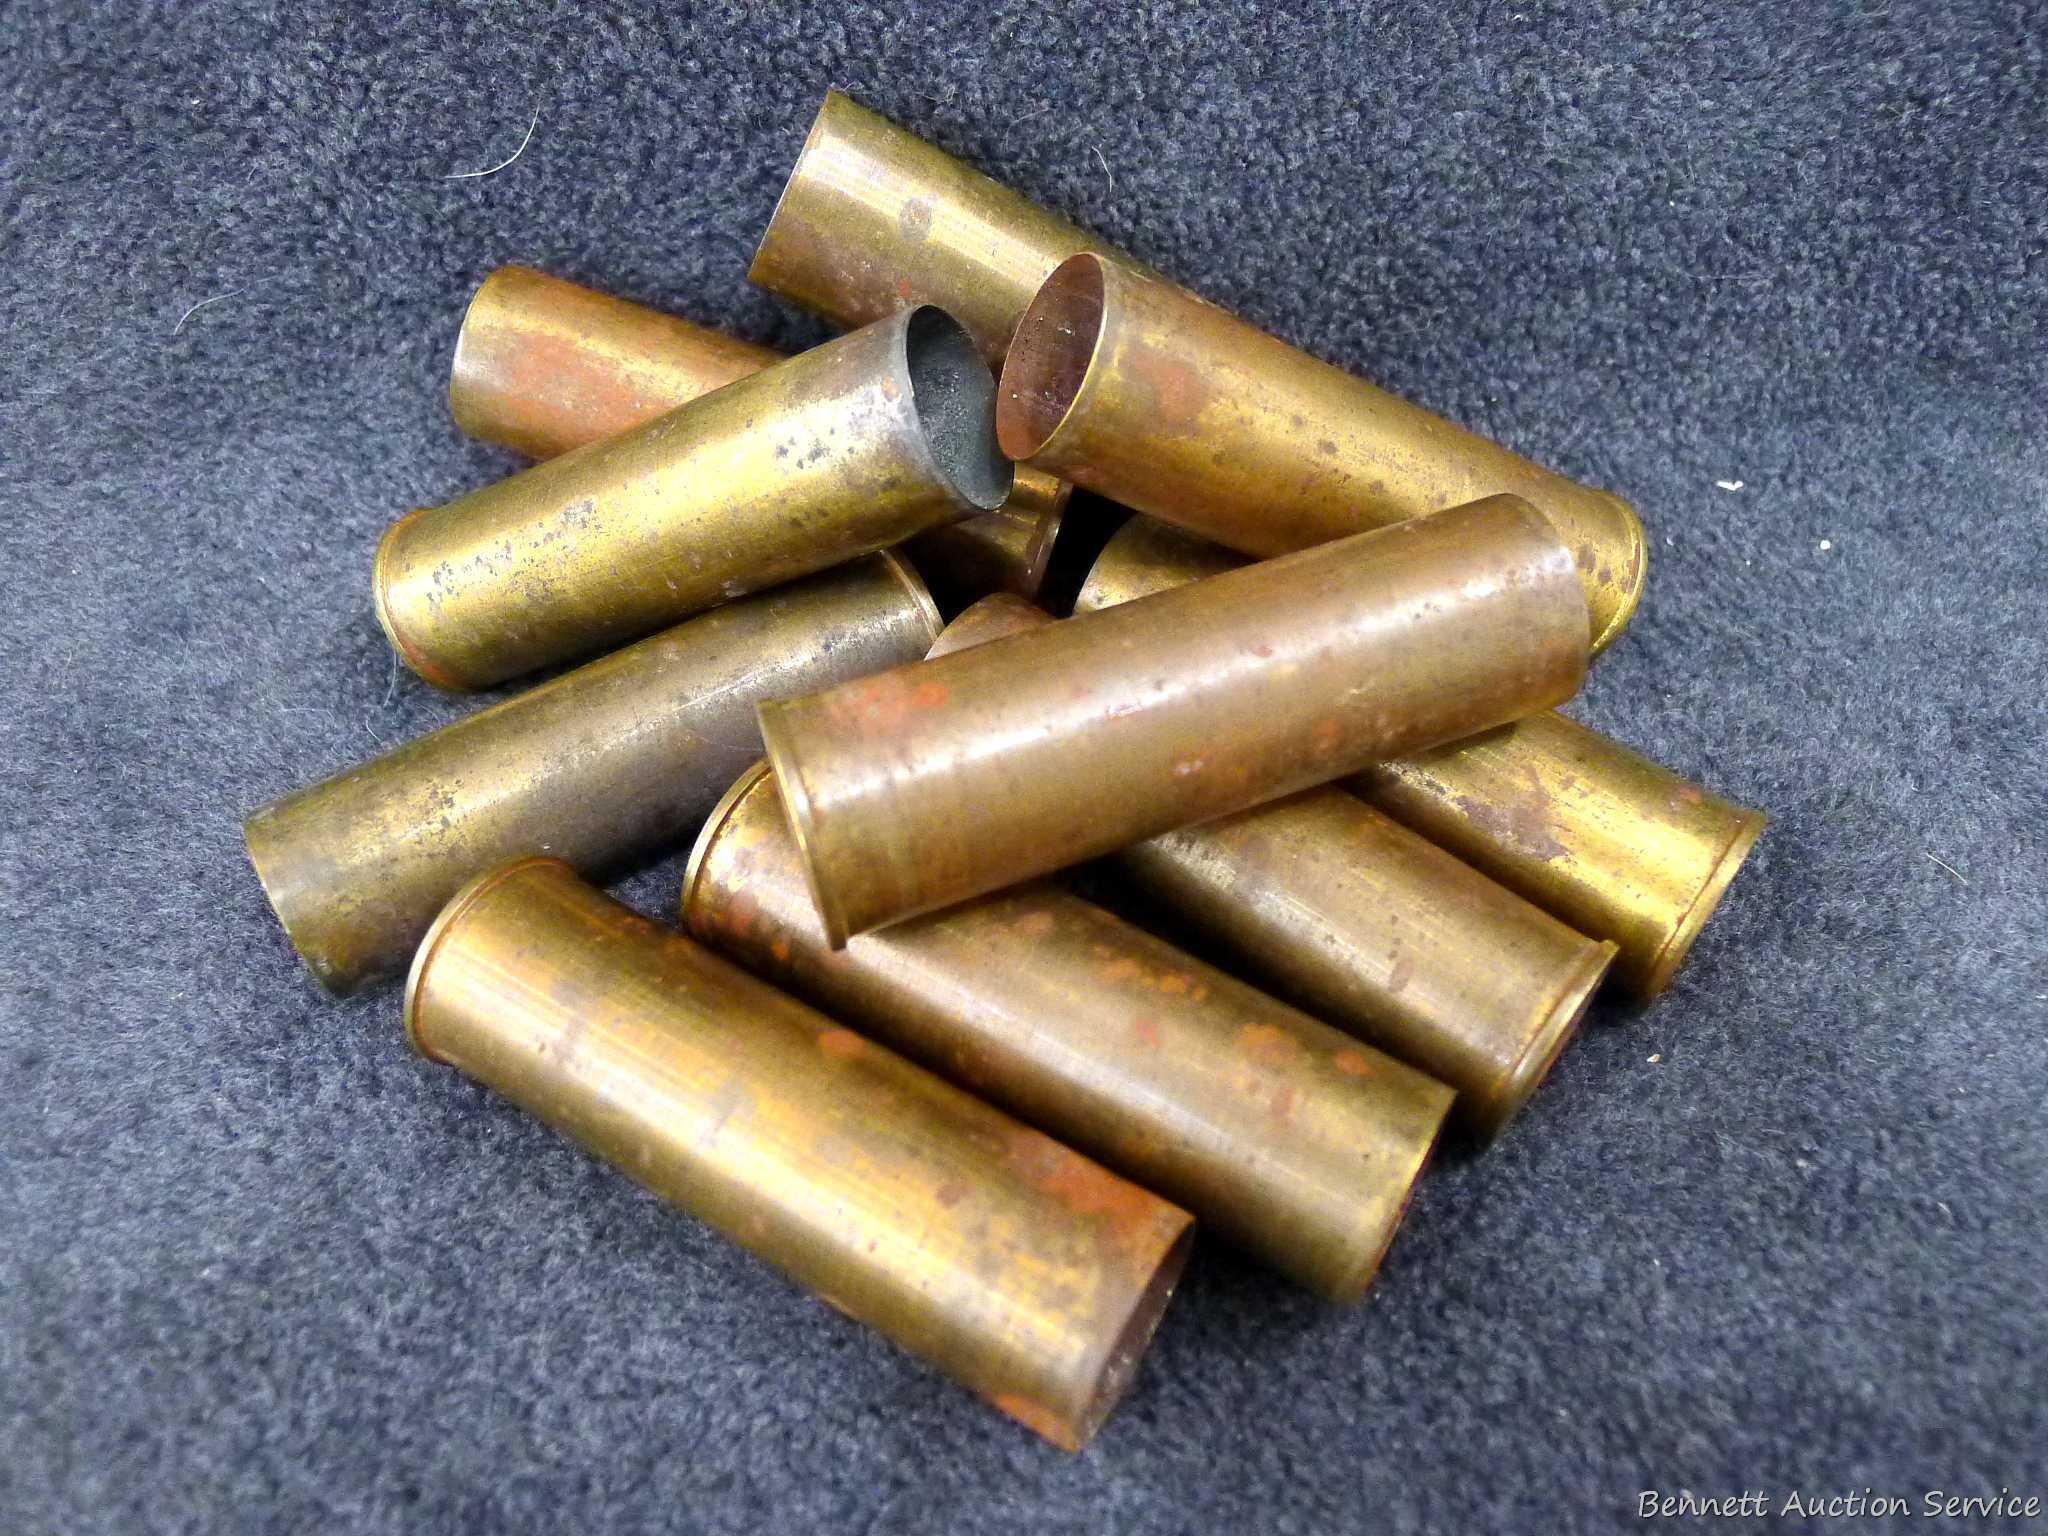 10 pieces of ACME 10 gauge brass shotshell cases